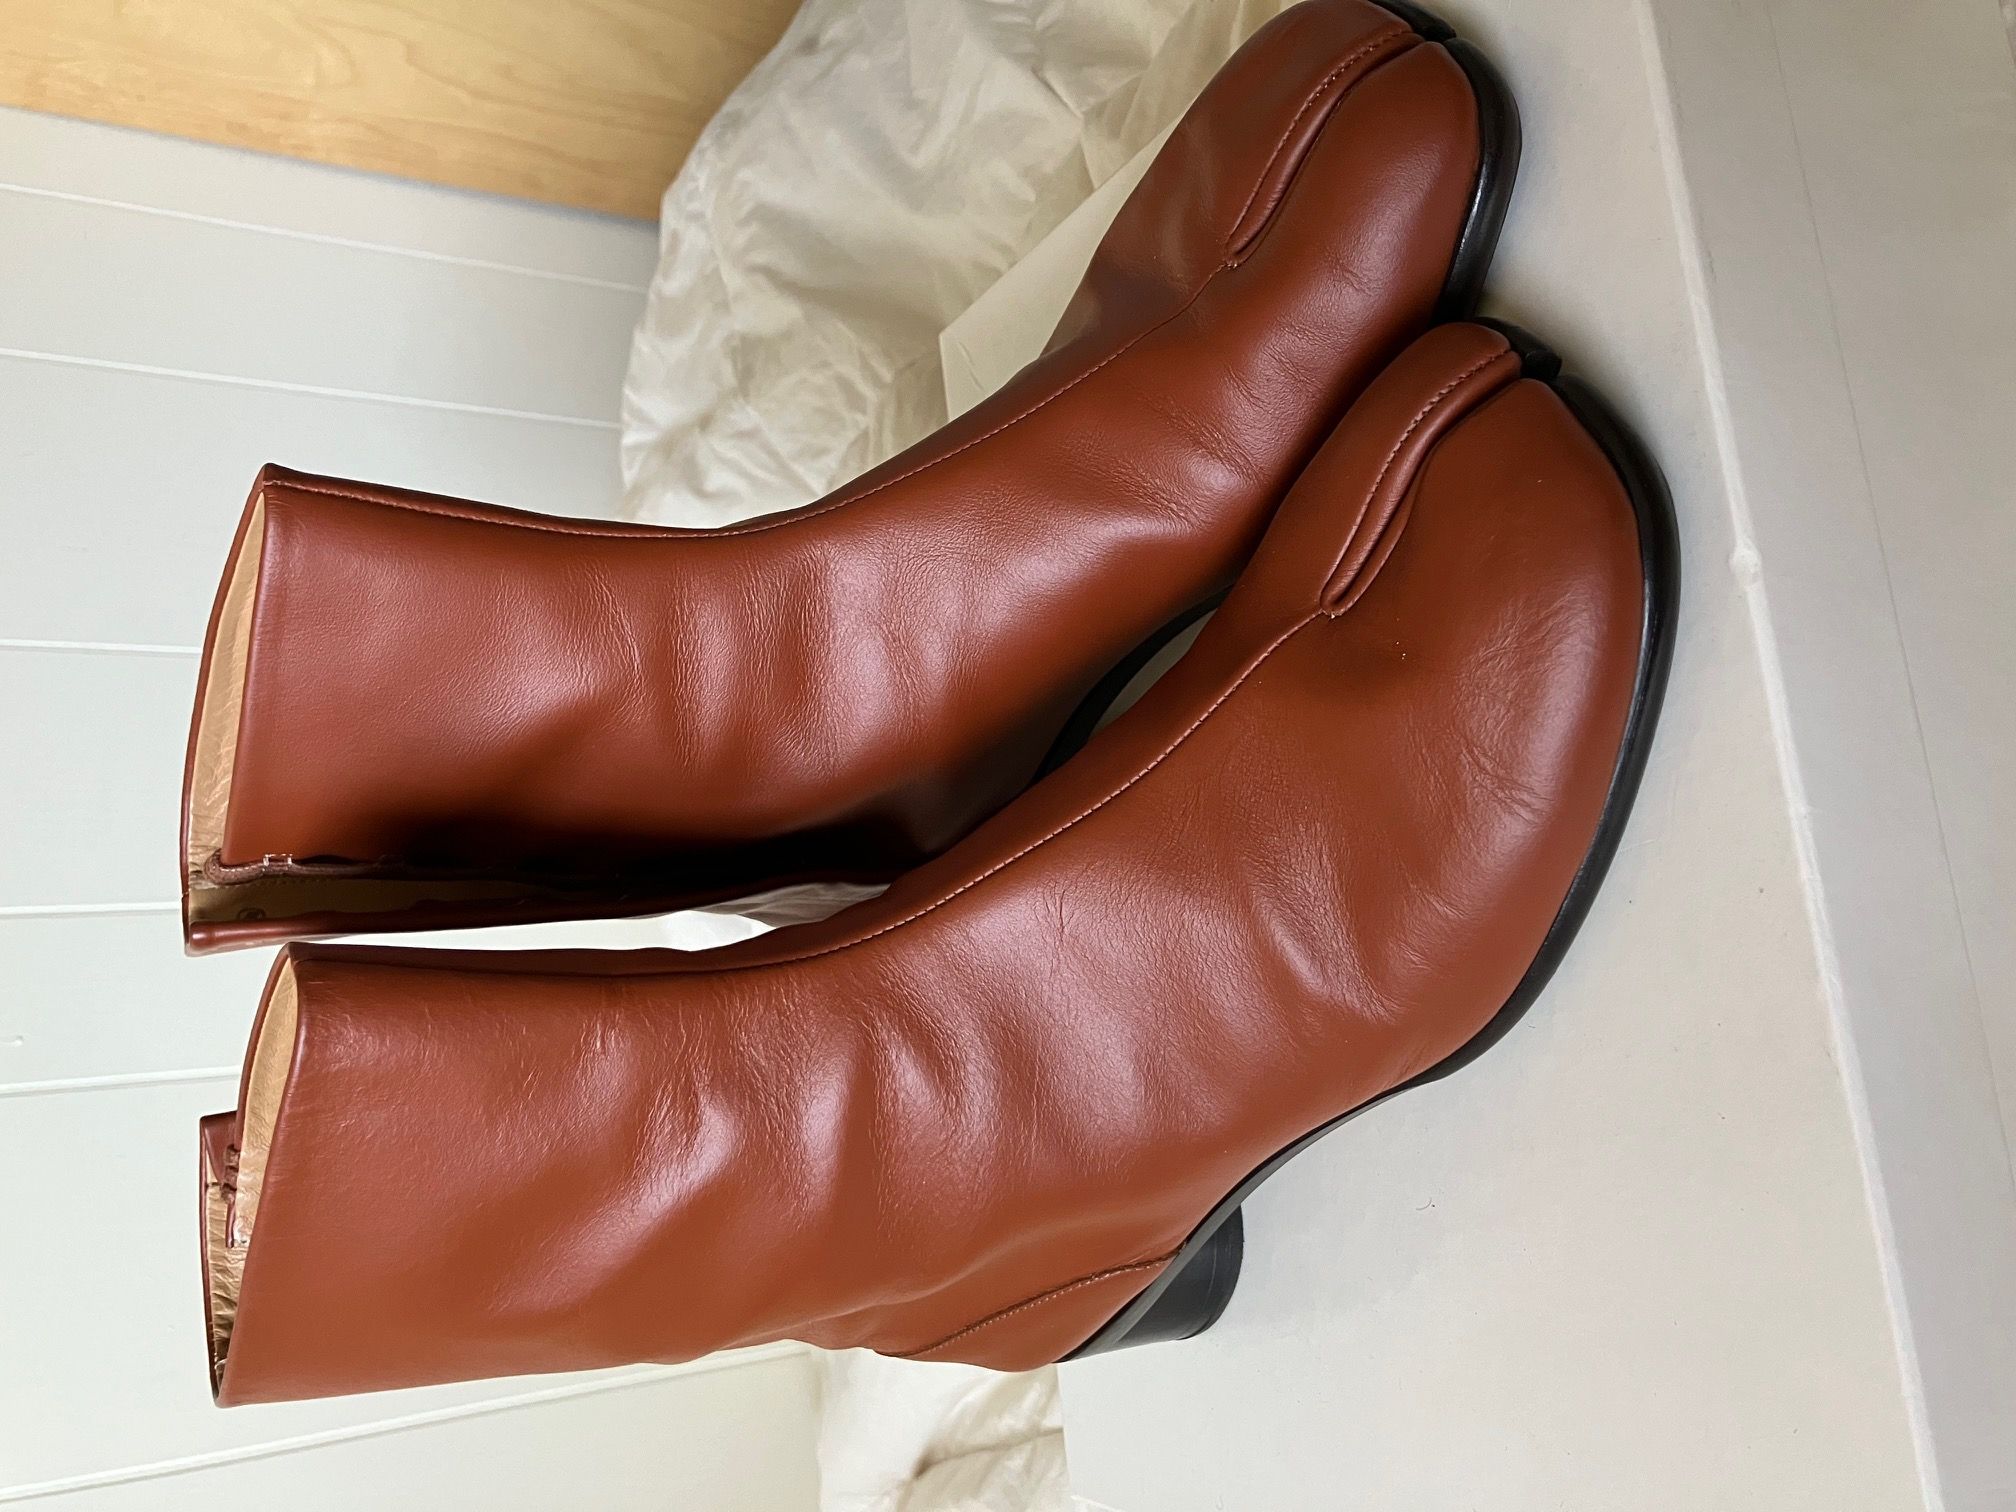 Maison Margiela Tabi Boots Size US 10 / EU 43 - 1 Preview